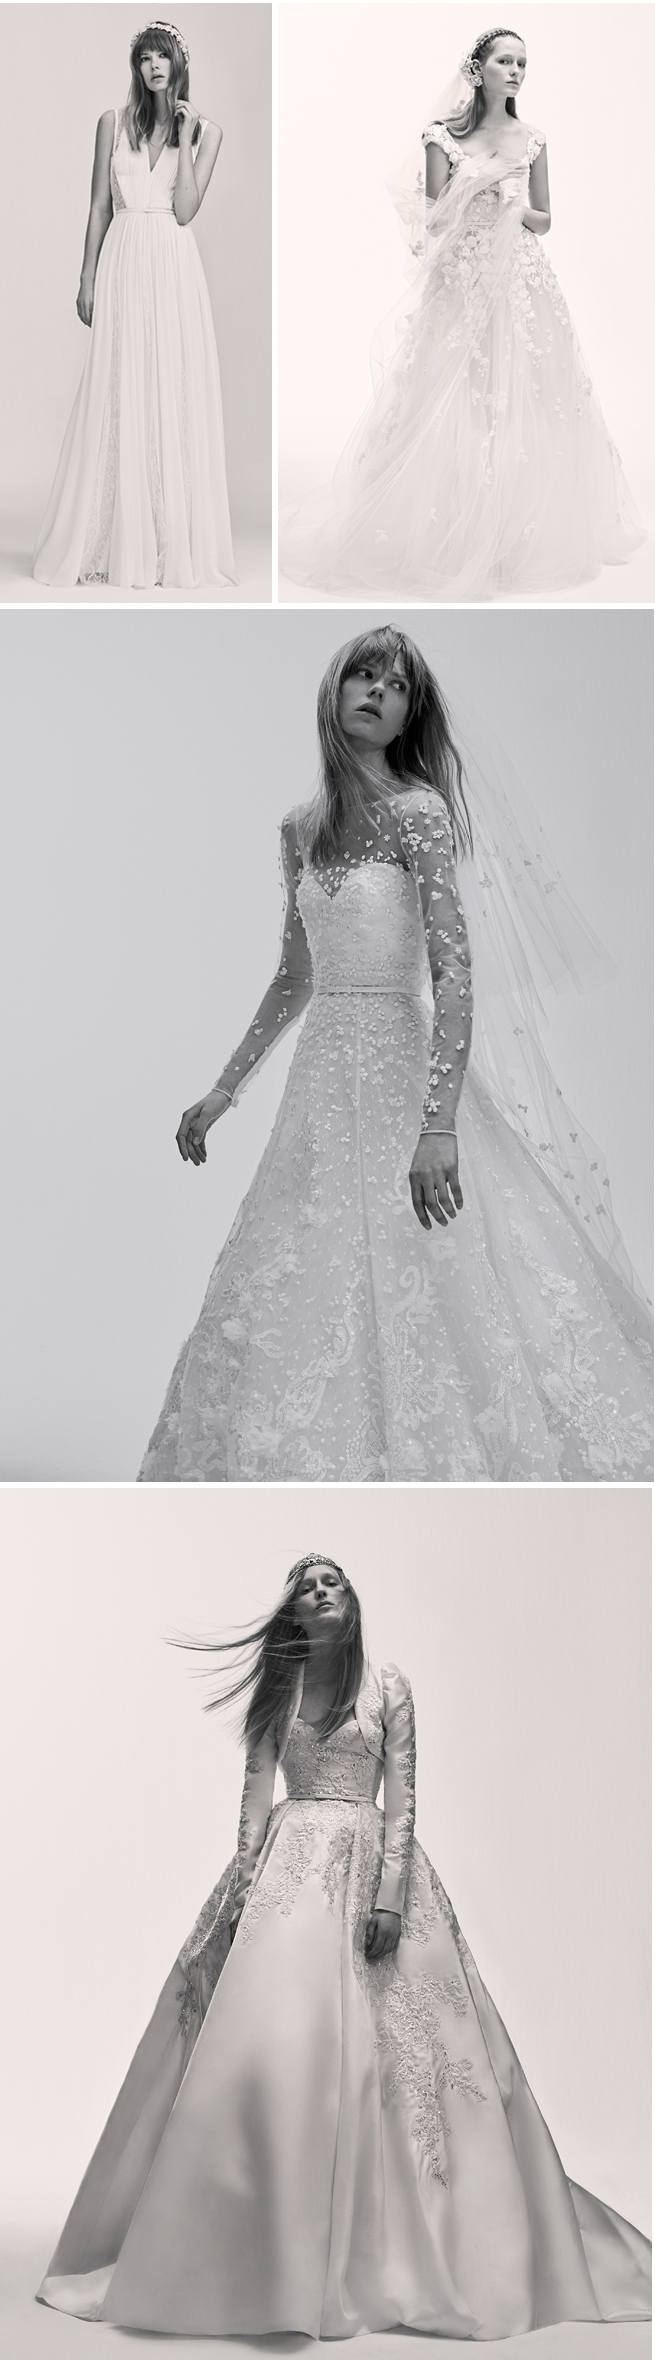 Elie Saab, Elie Saab Bridal, Bridal Gowns, Perfect wedding Blog, Perfect Wedding Magazine, Bridal Fashion, Oui, Haute Couture